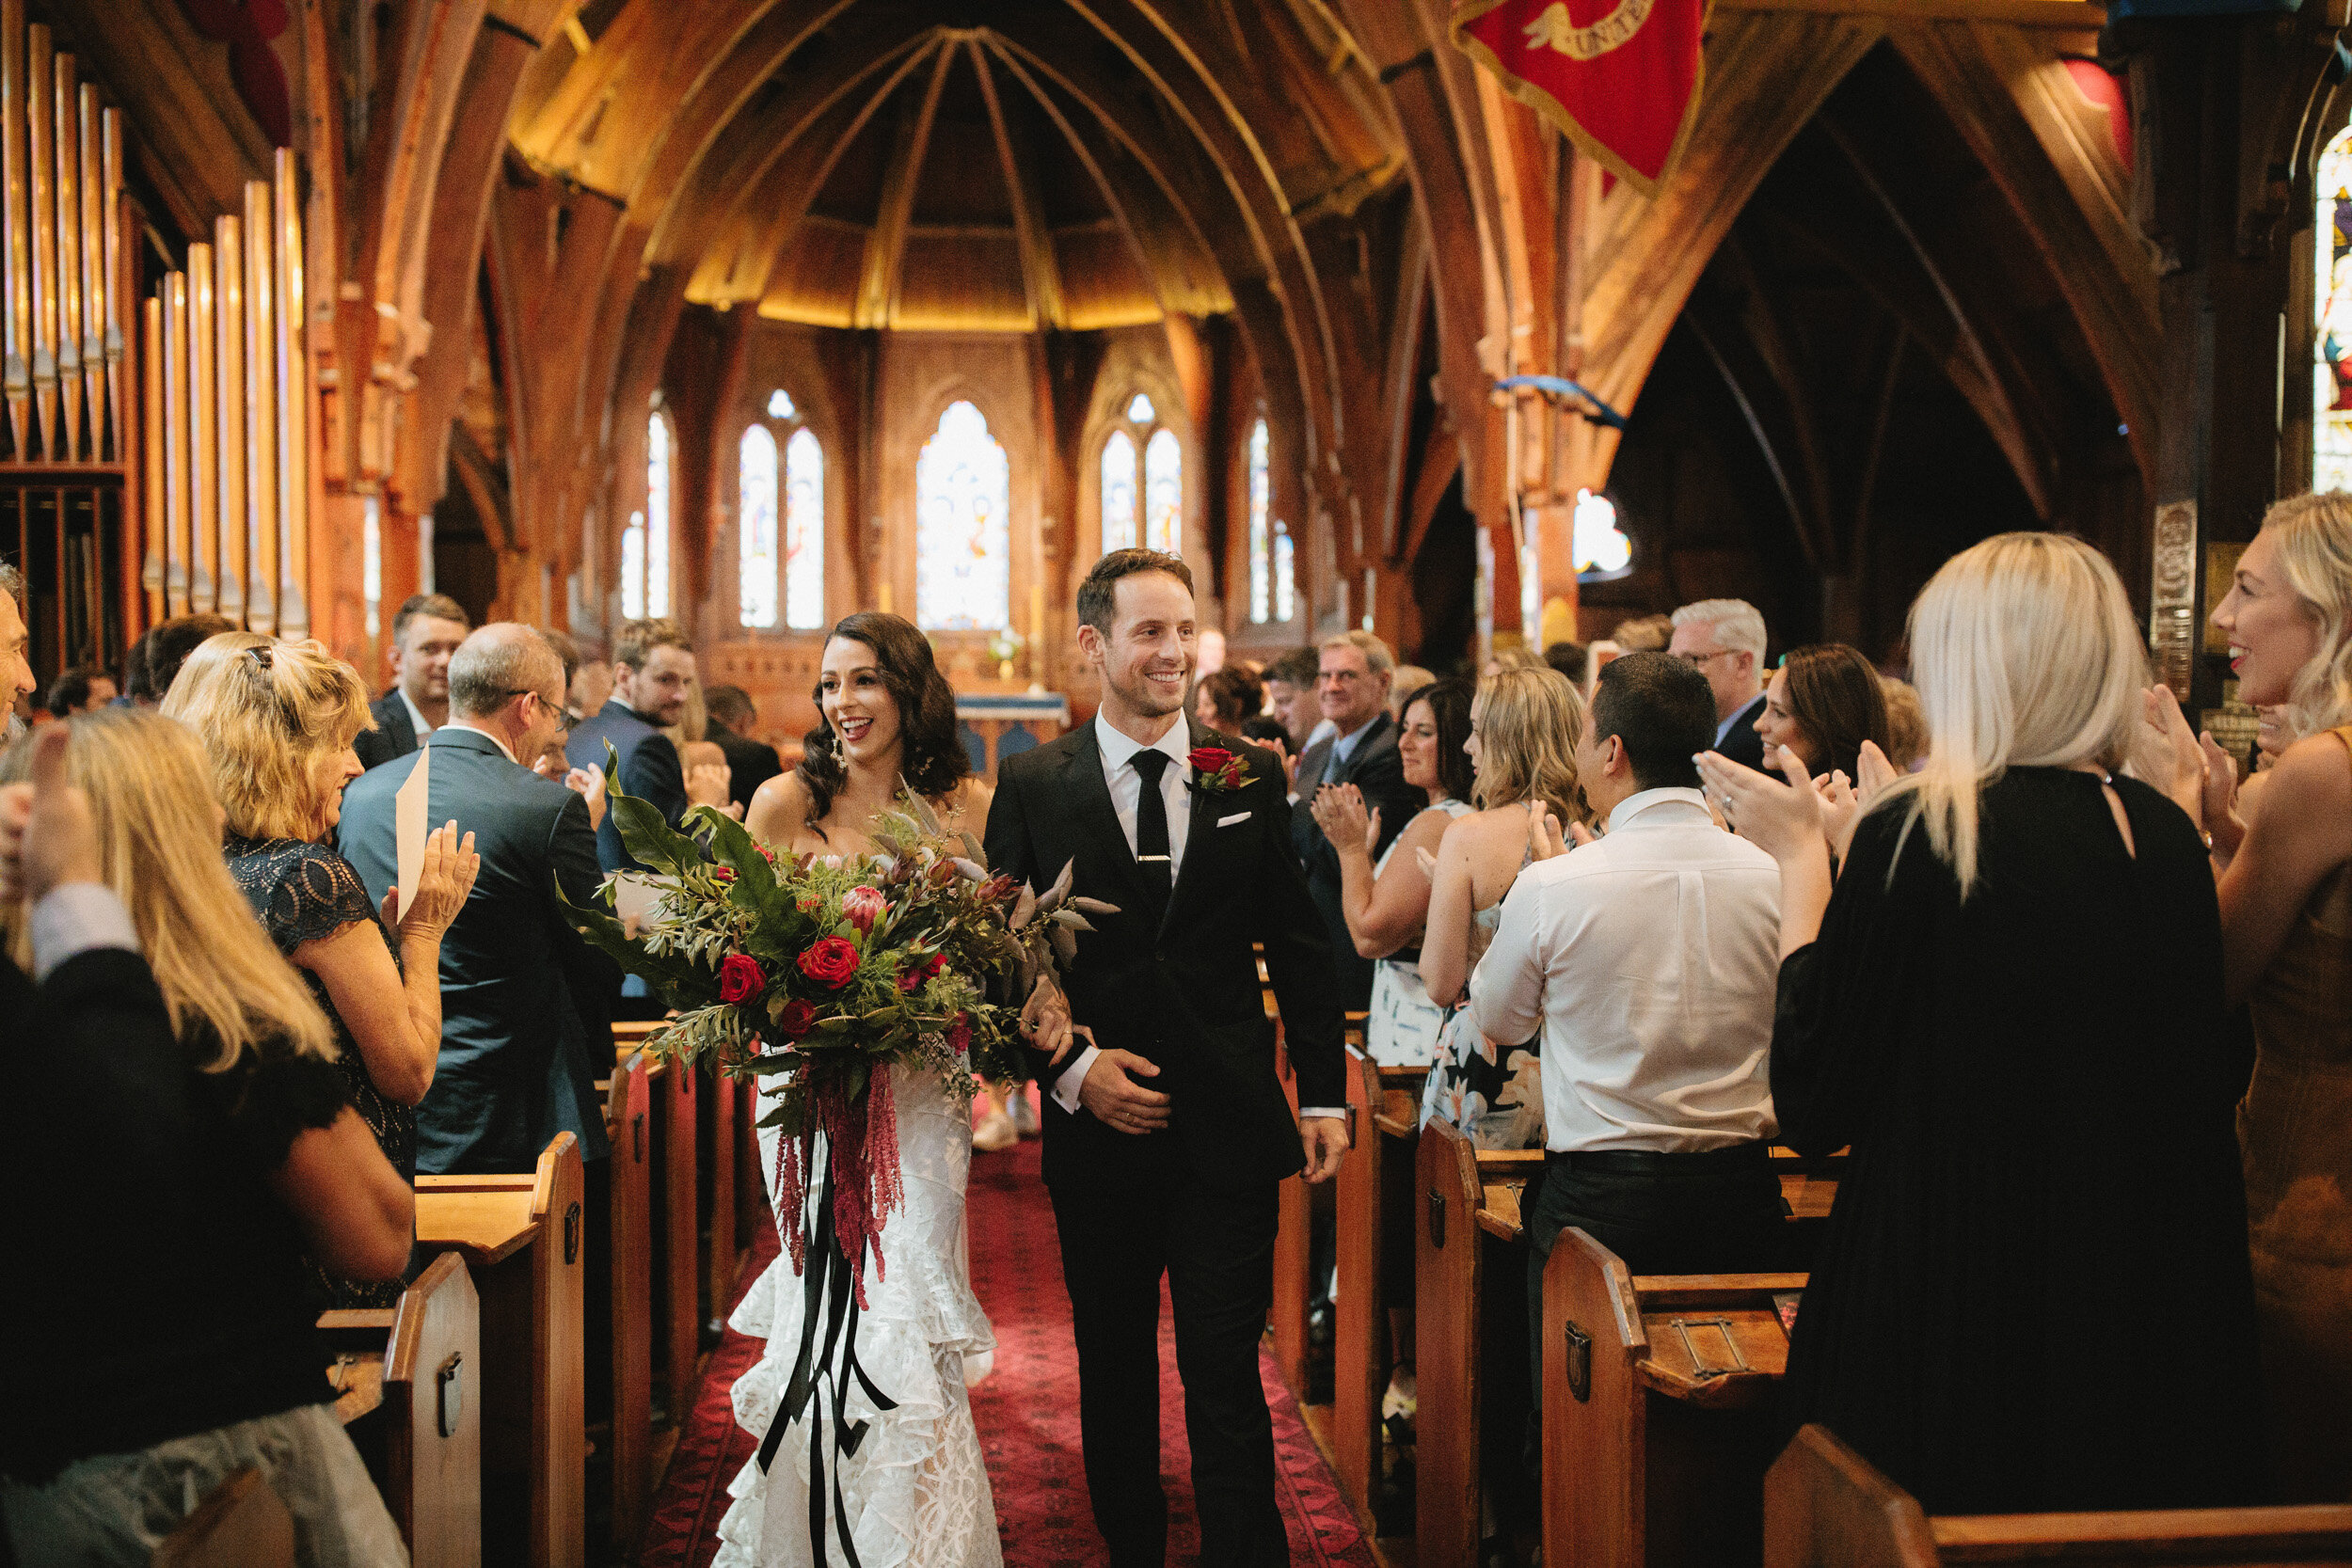 Wellington City church wedding